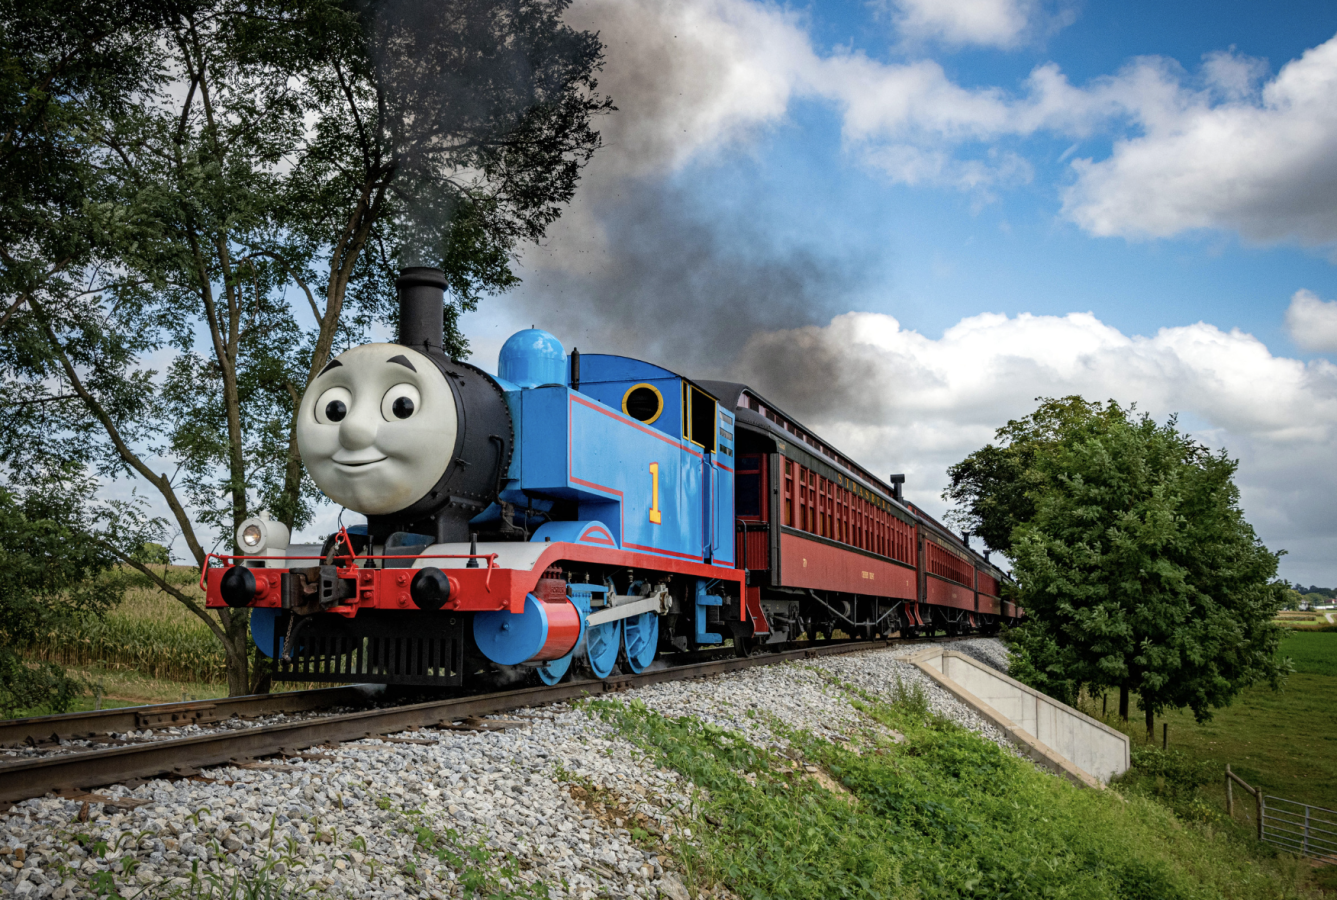 A train engine painted as the cartoon Thomas the Tank Engine pulls train cars along the Strasburg Rail Road.